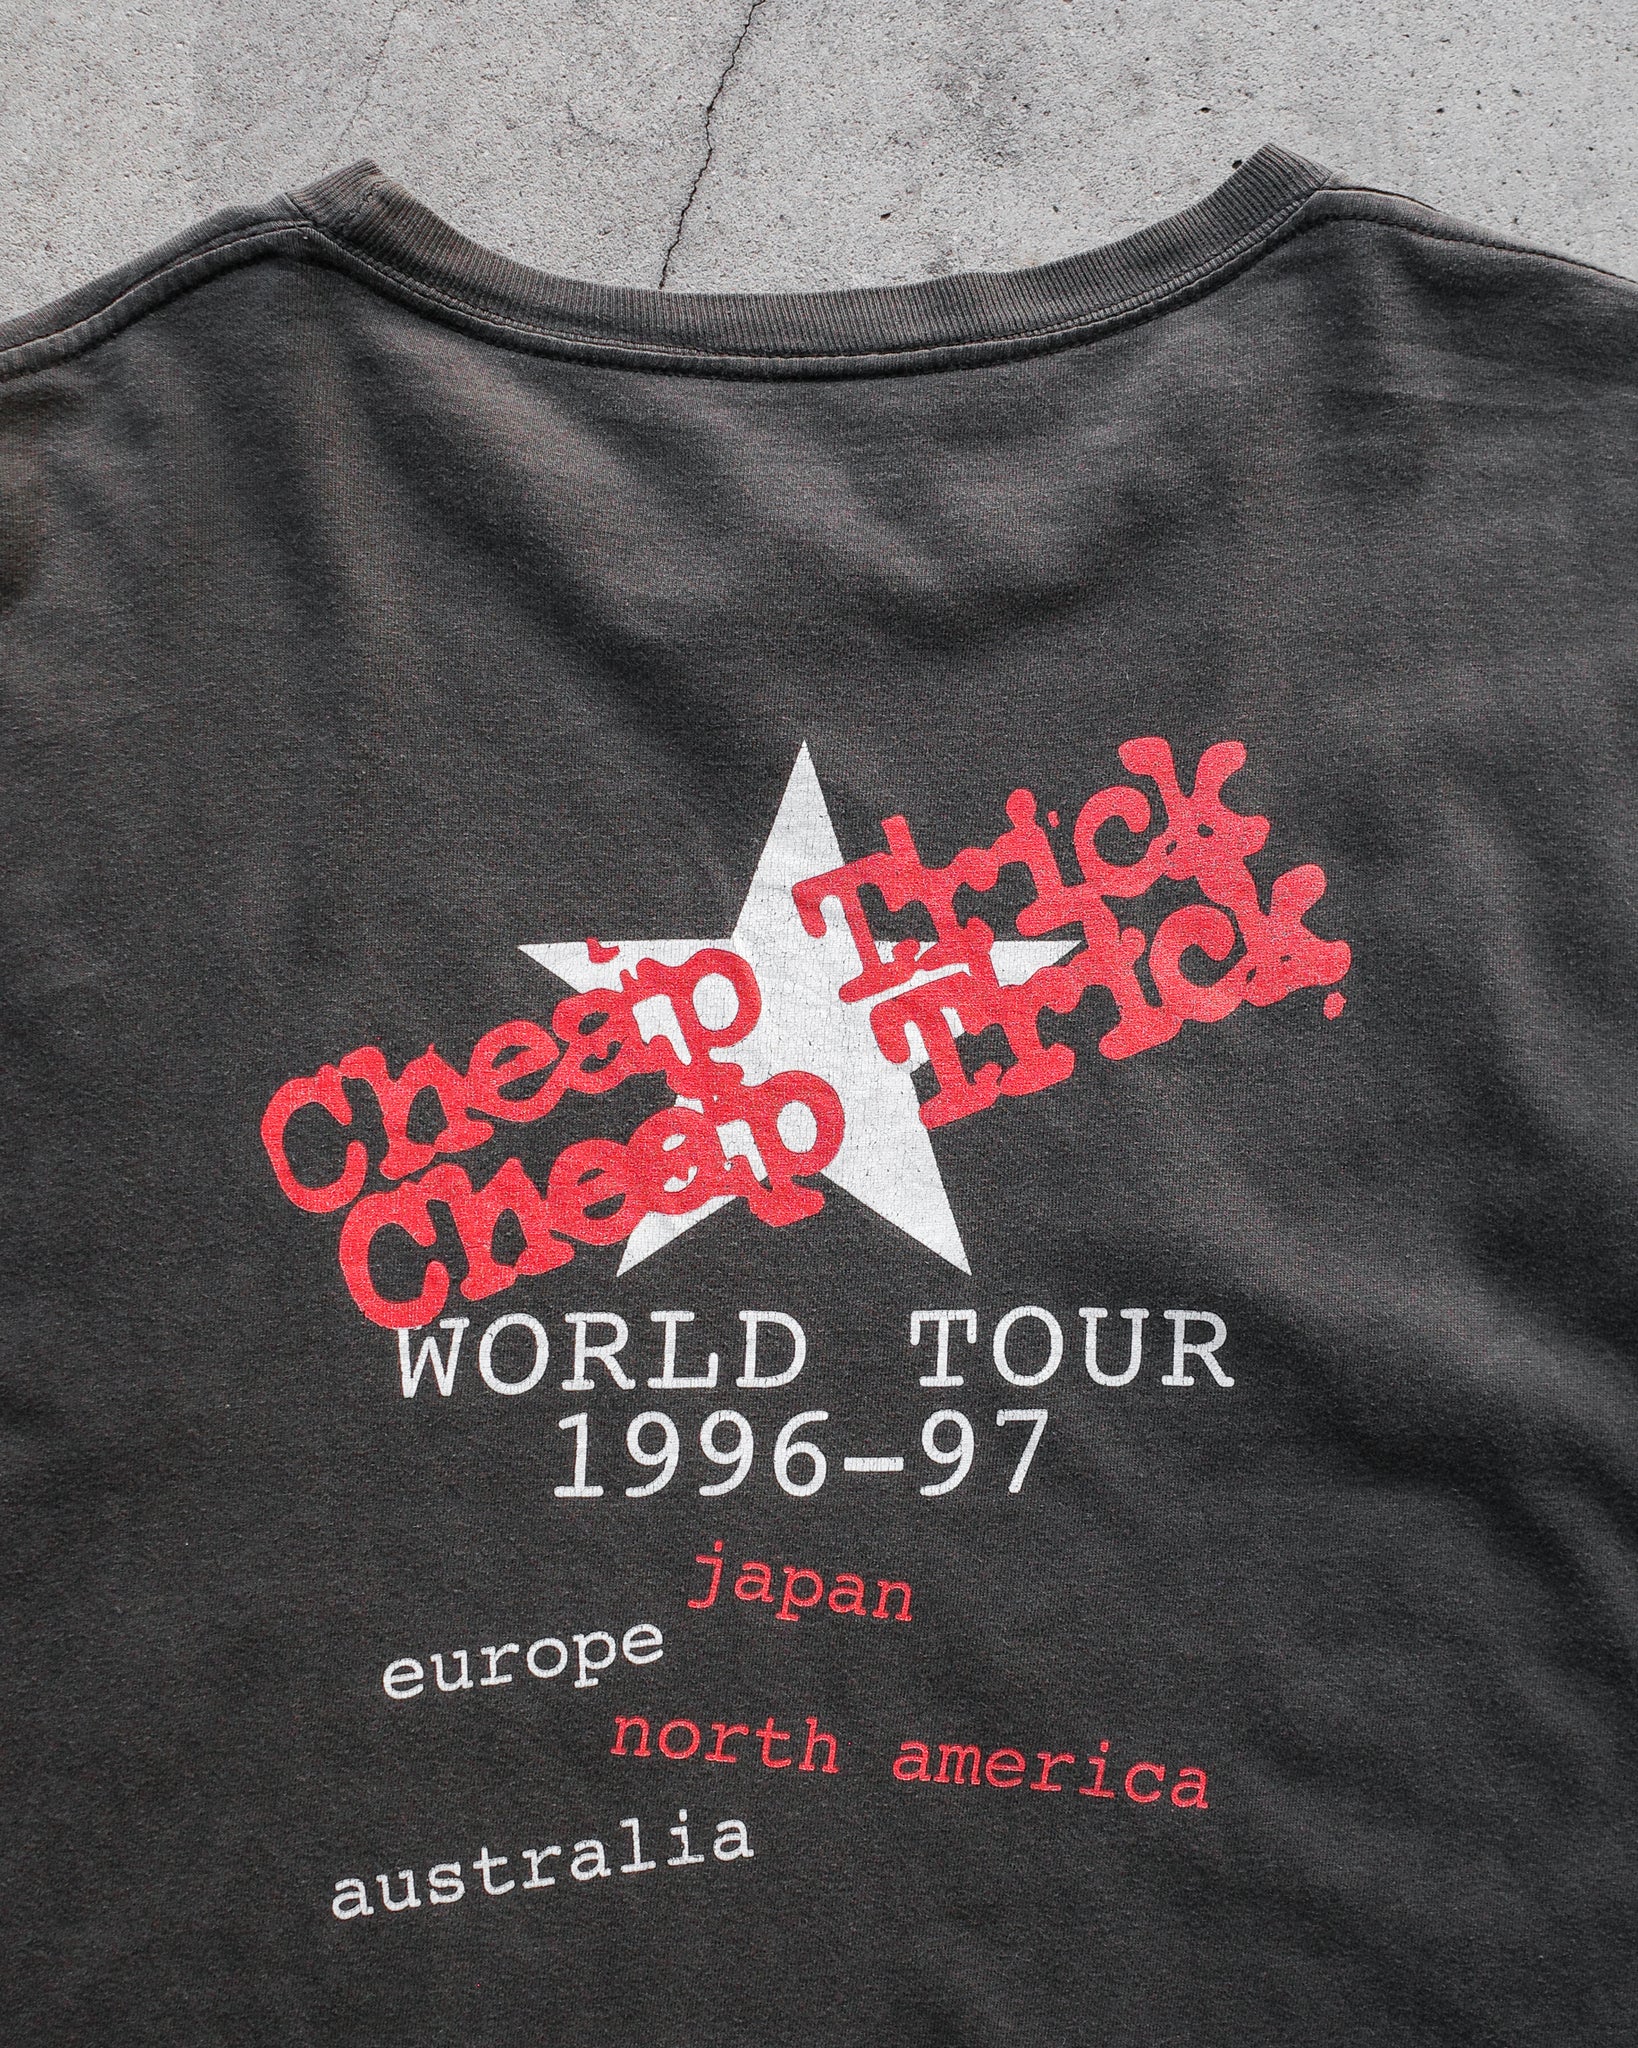 1996 Cheap Trick "dream police world tour" Tee